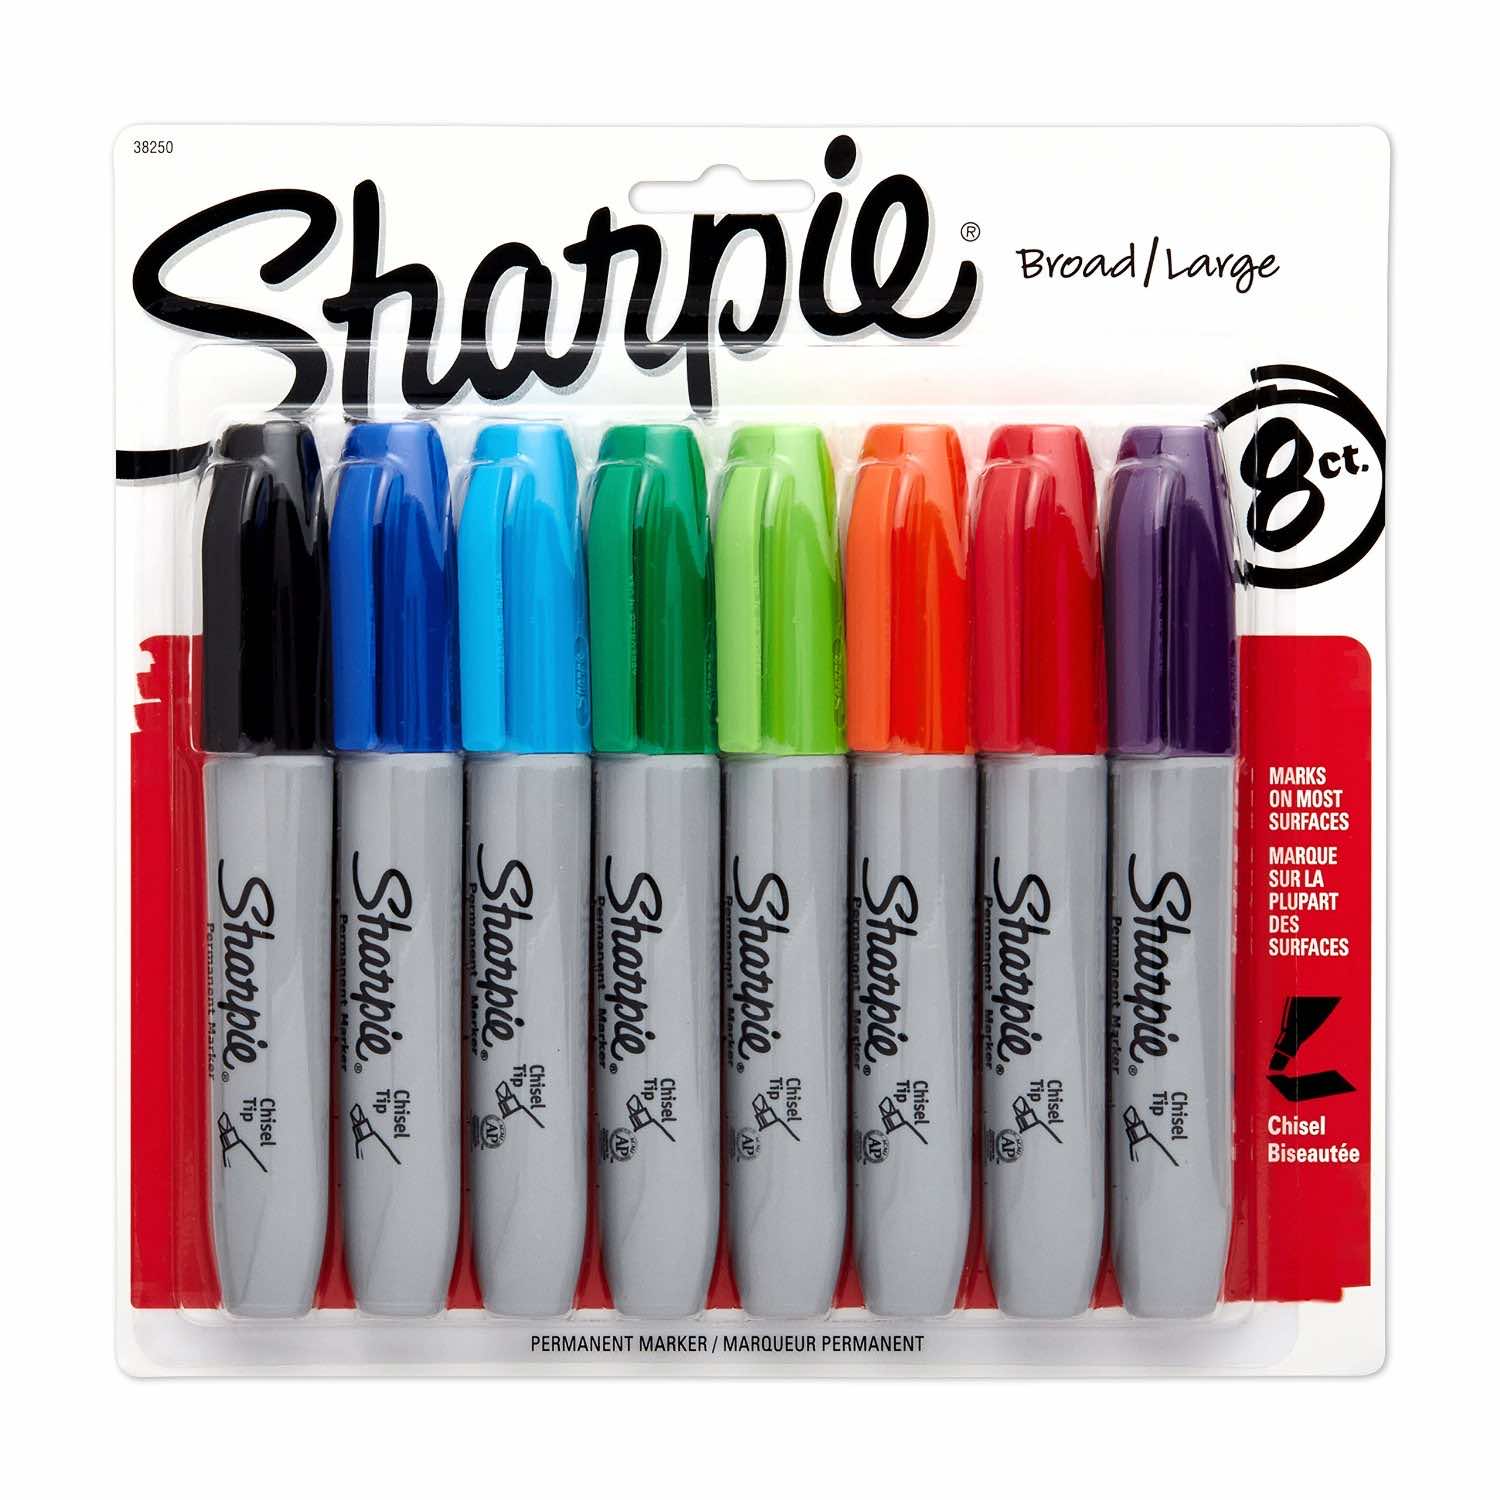 10 Best Sharpie Pen Set 